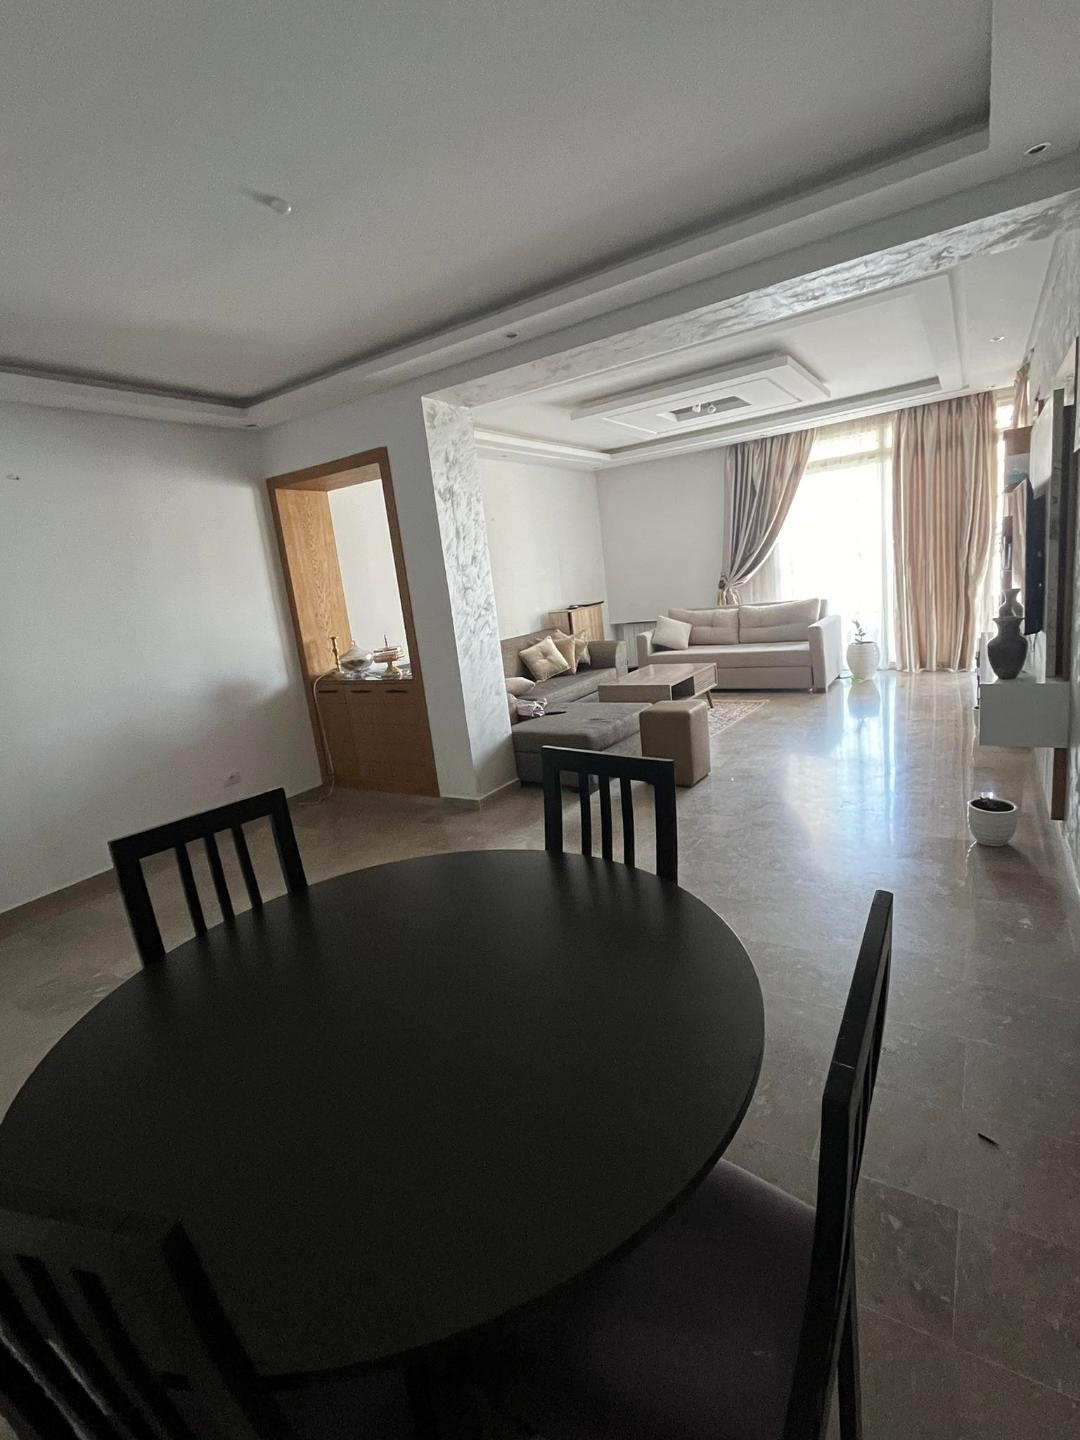 Sousse Jaouhara Sahloul Location vacances Appart. 3 pices Joli appartement